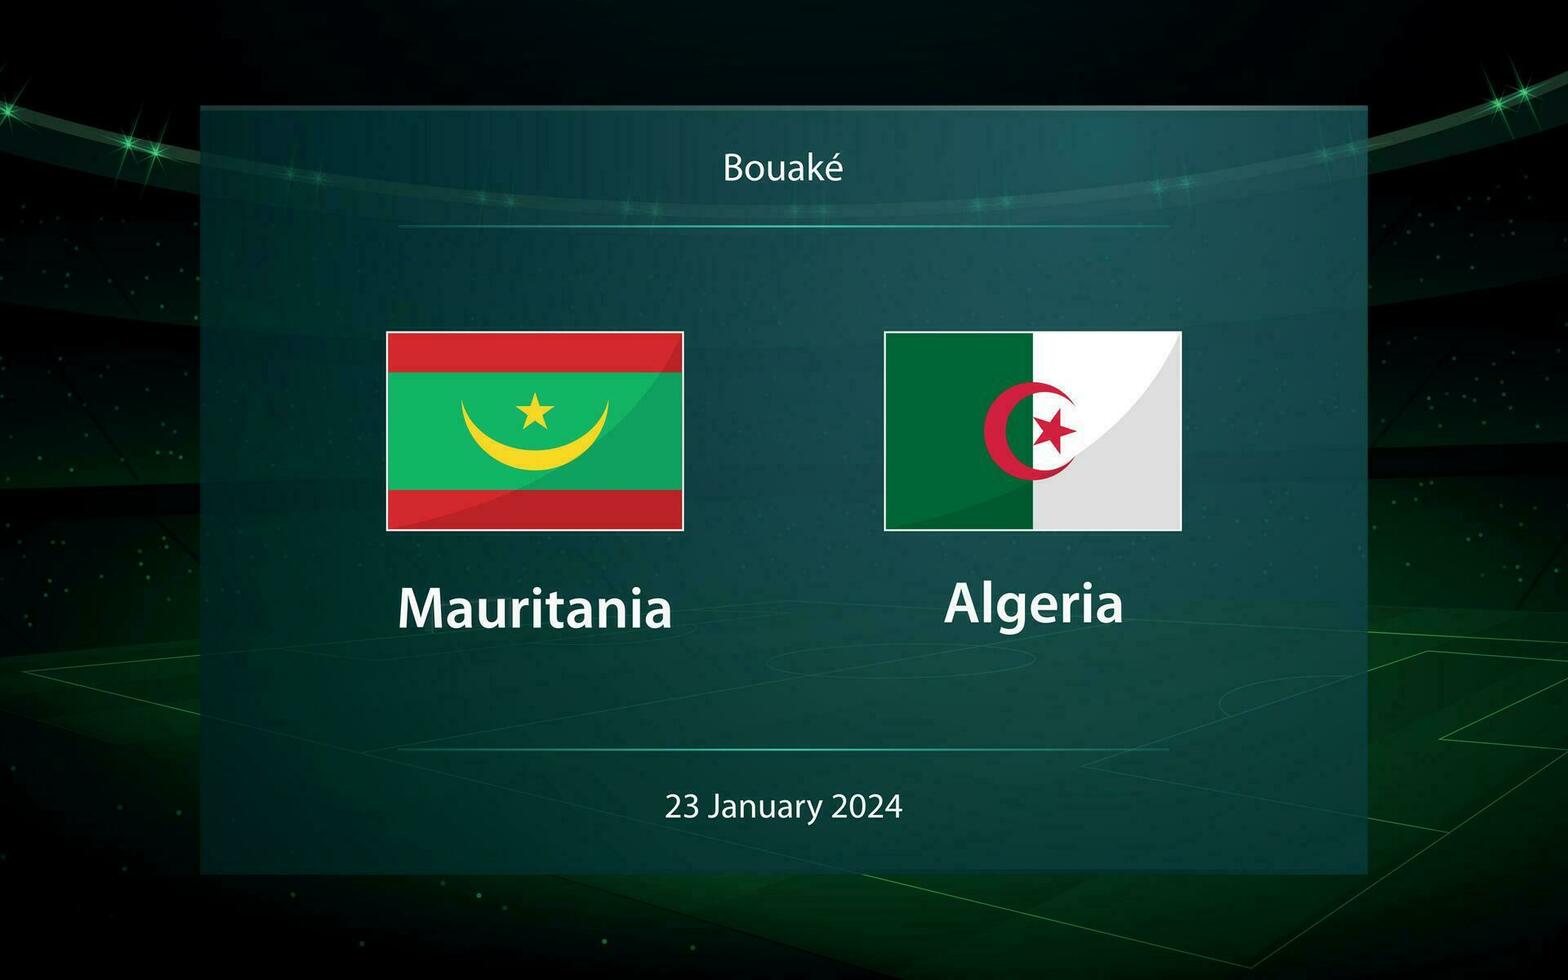 Mauritania vs Argelia fútbol americano marcador transmitir gráfico vector